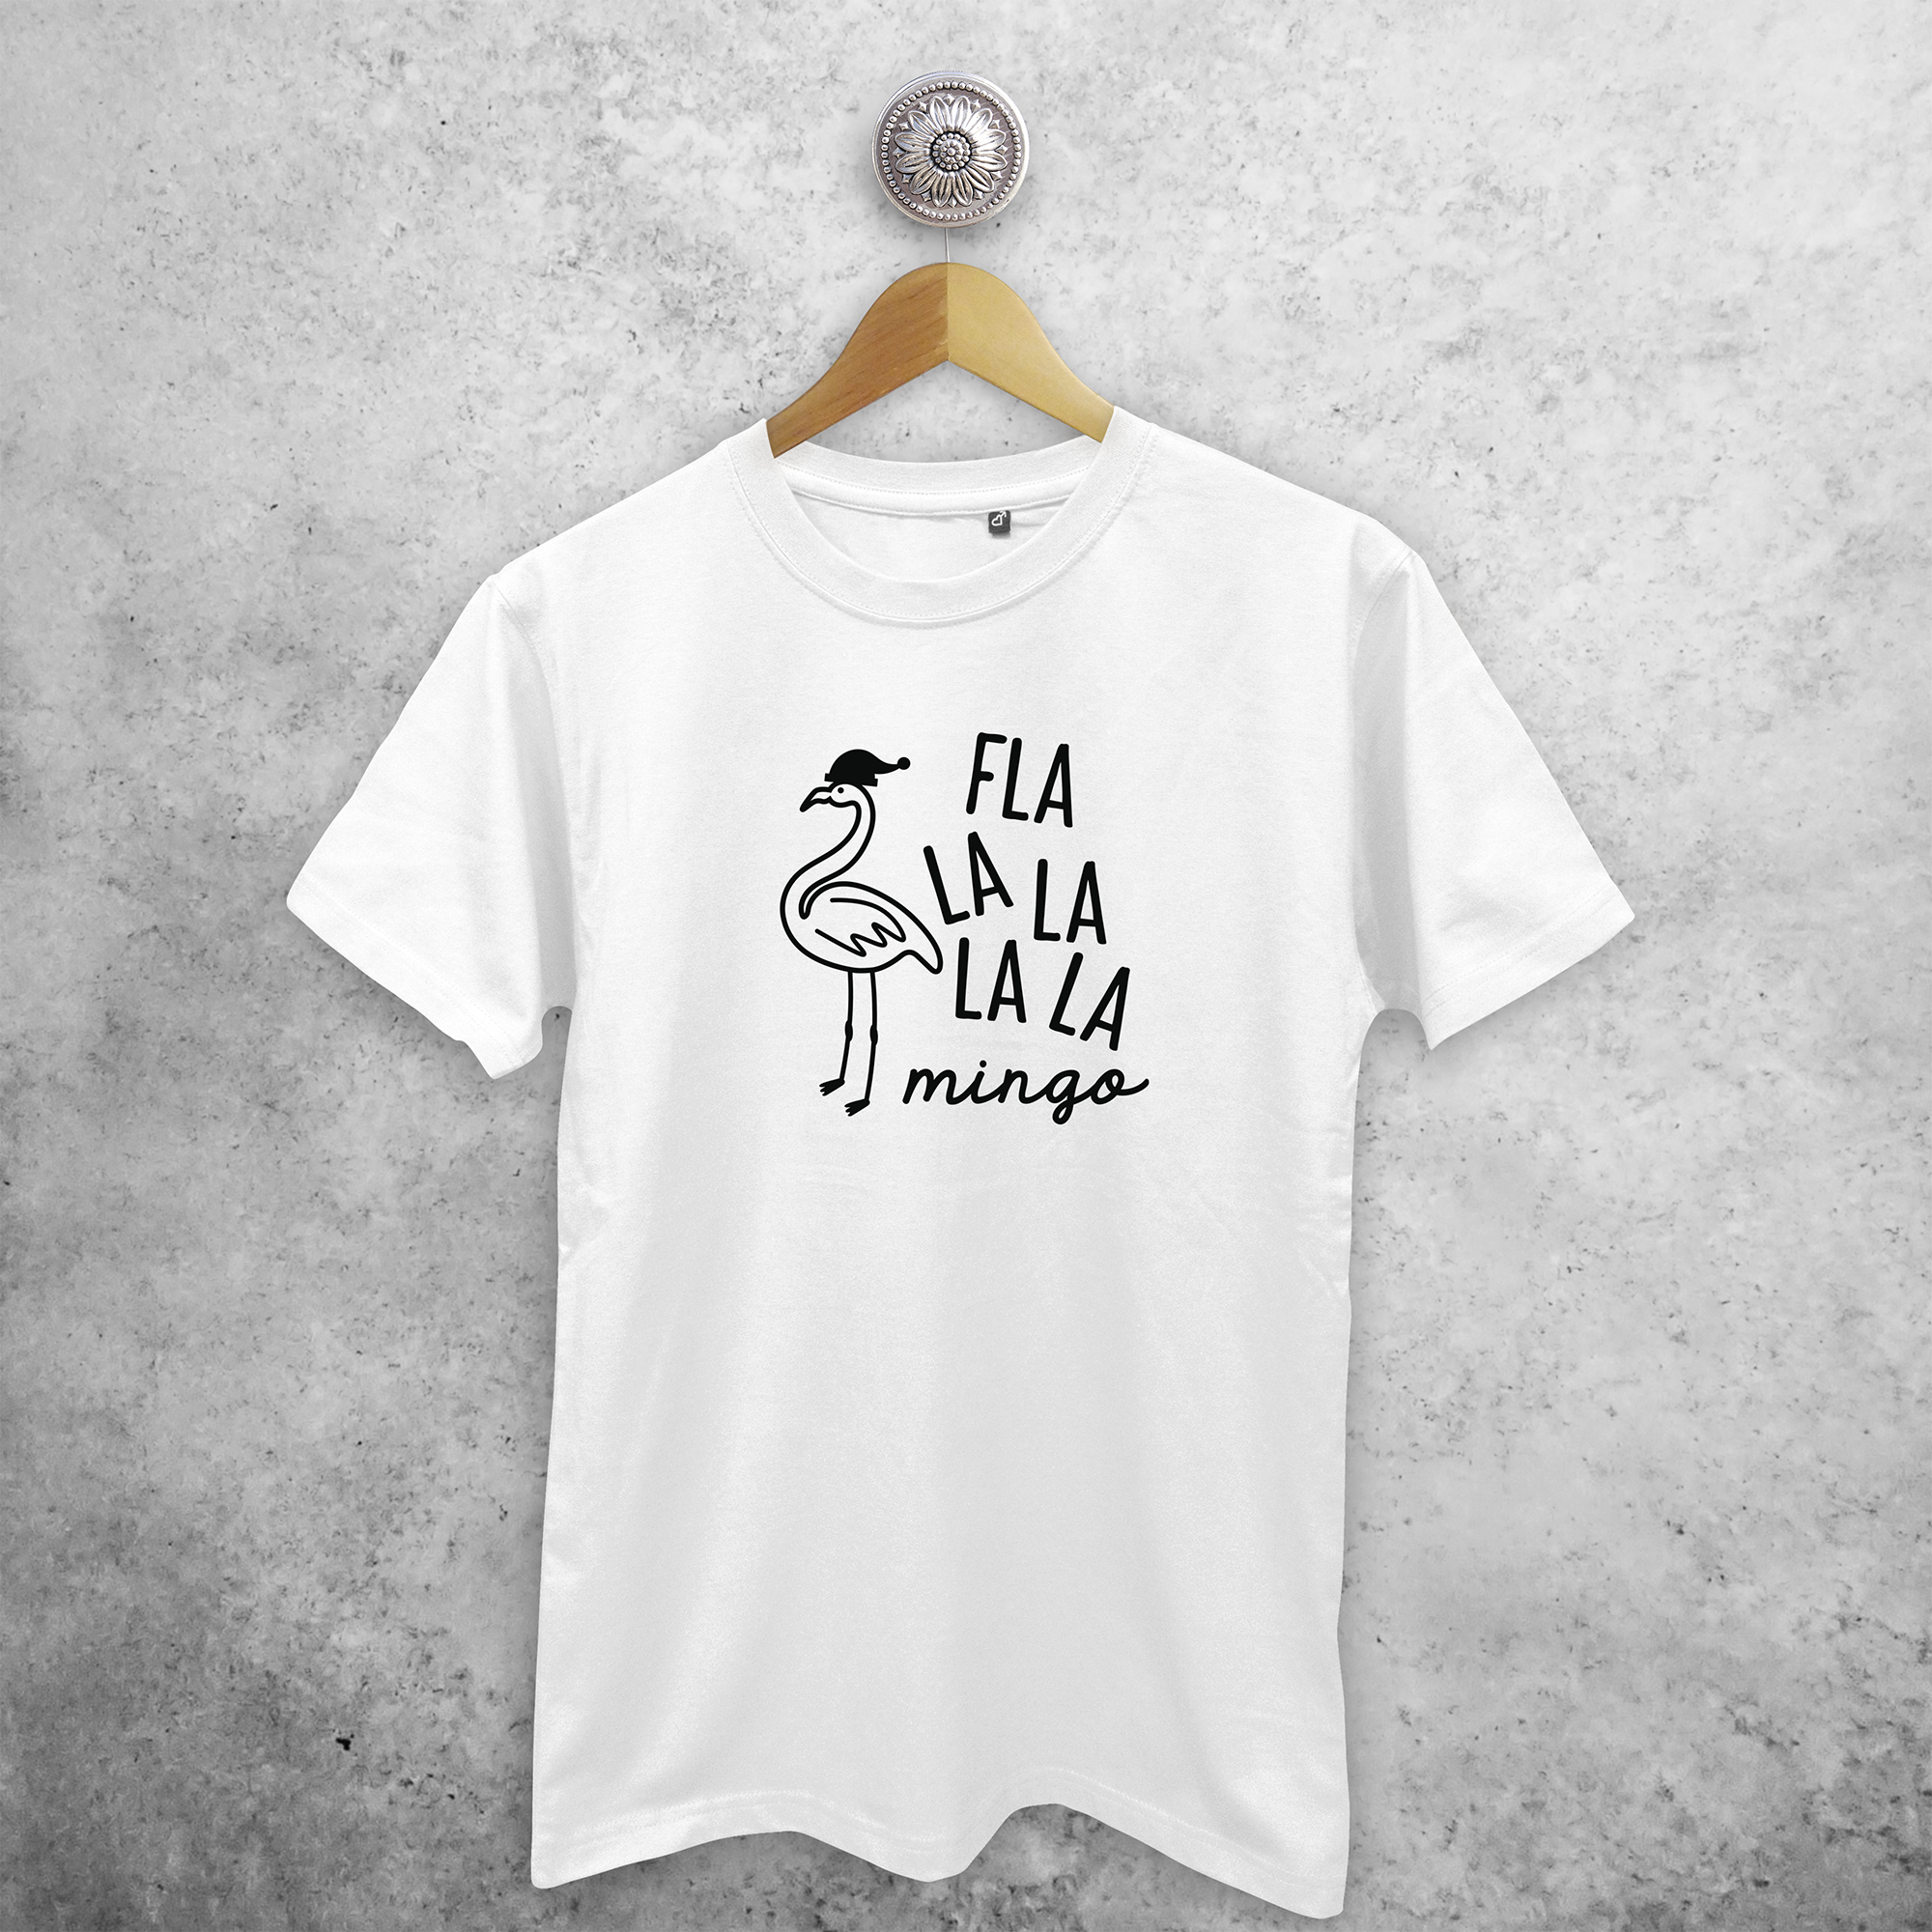 Adult shirt with short sleeves, with ‘Fla la la la la mingo’ print by KMLeon.